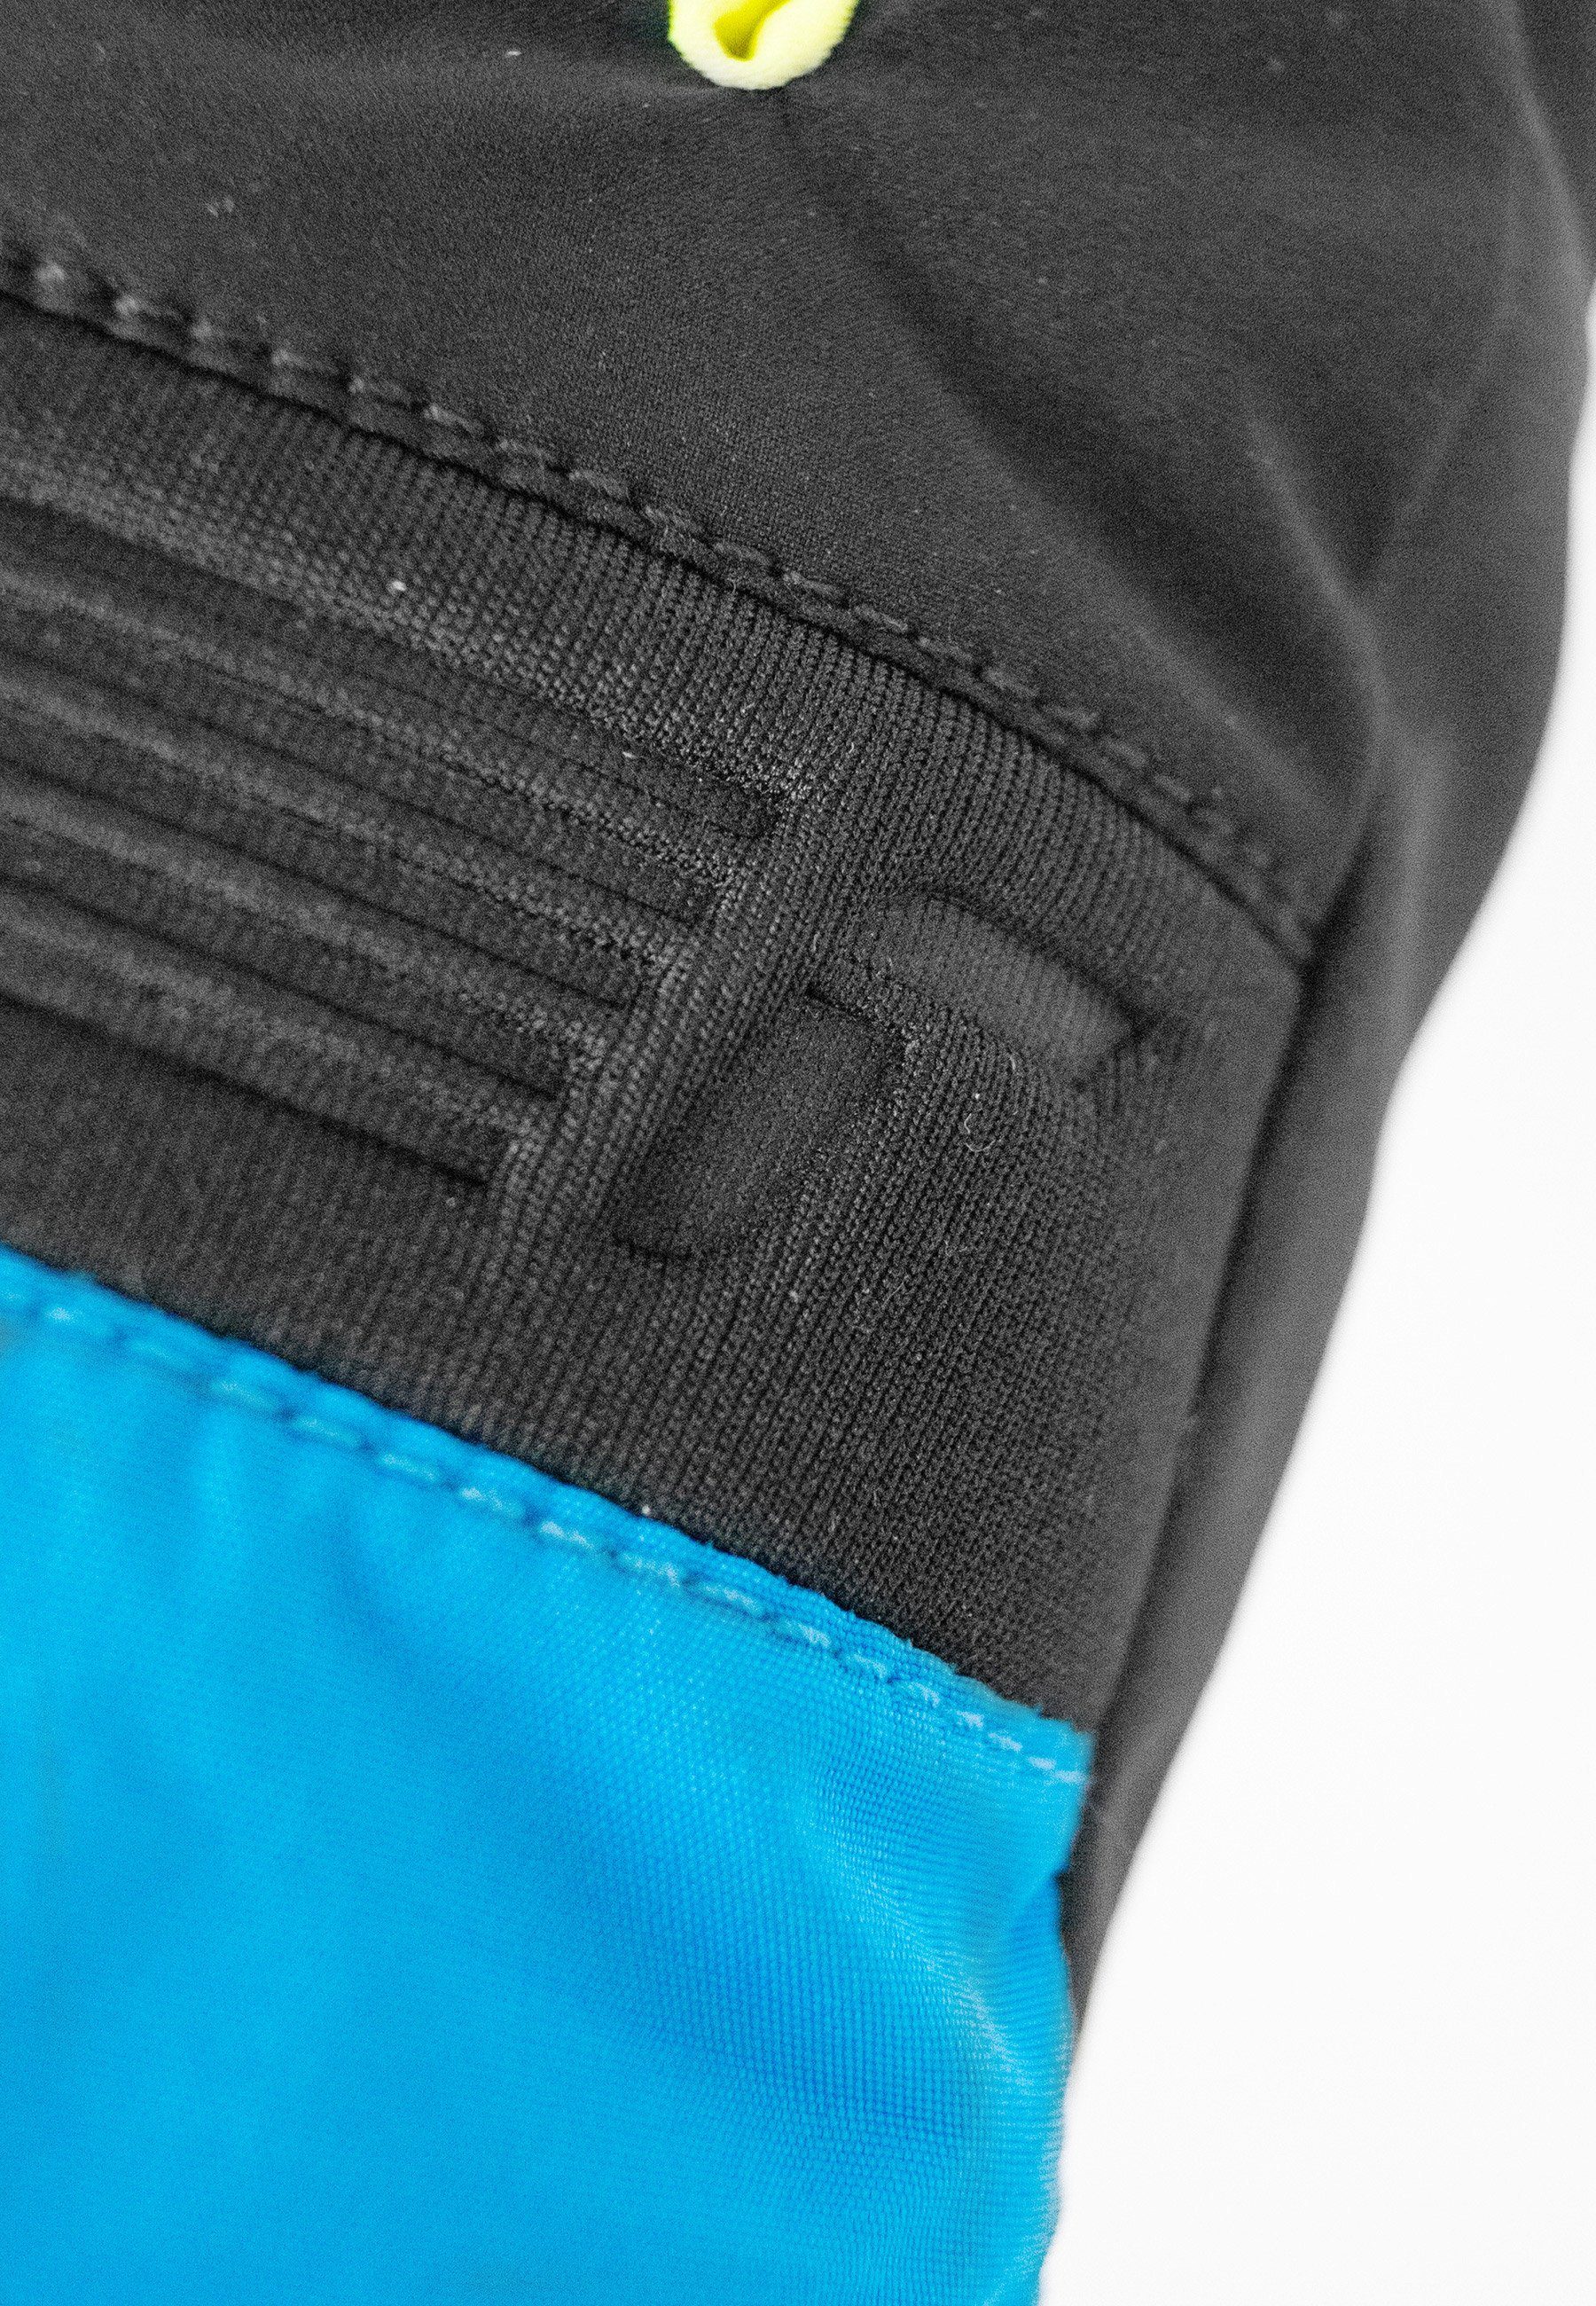 Reusch Skihandschuhe Bradley R-TEX® in Design XT blau-schwarz schickem